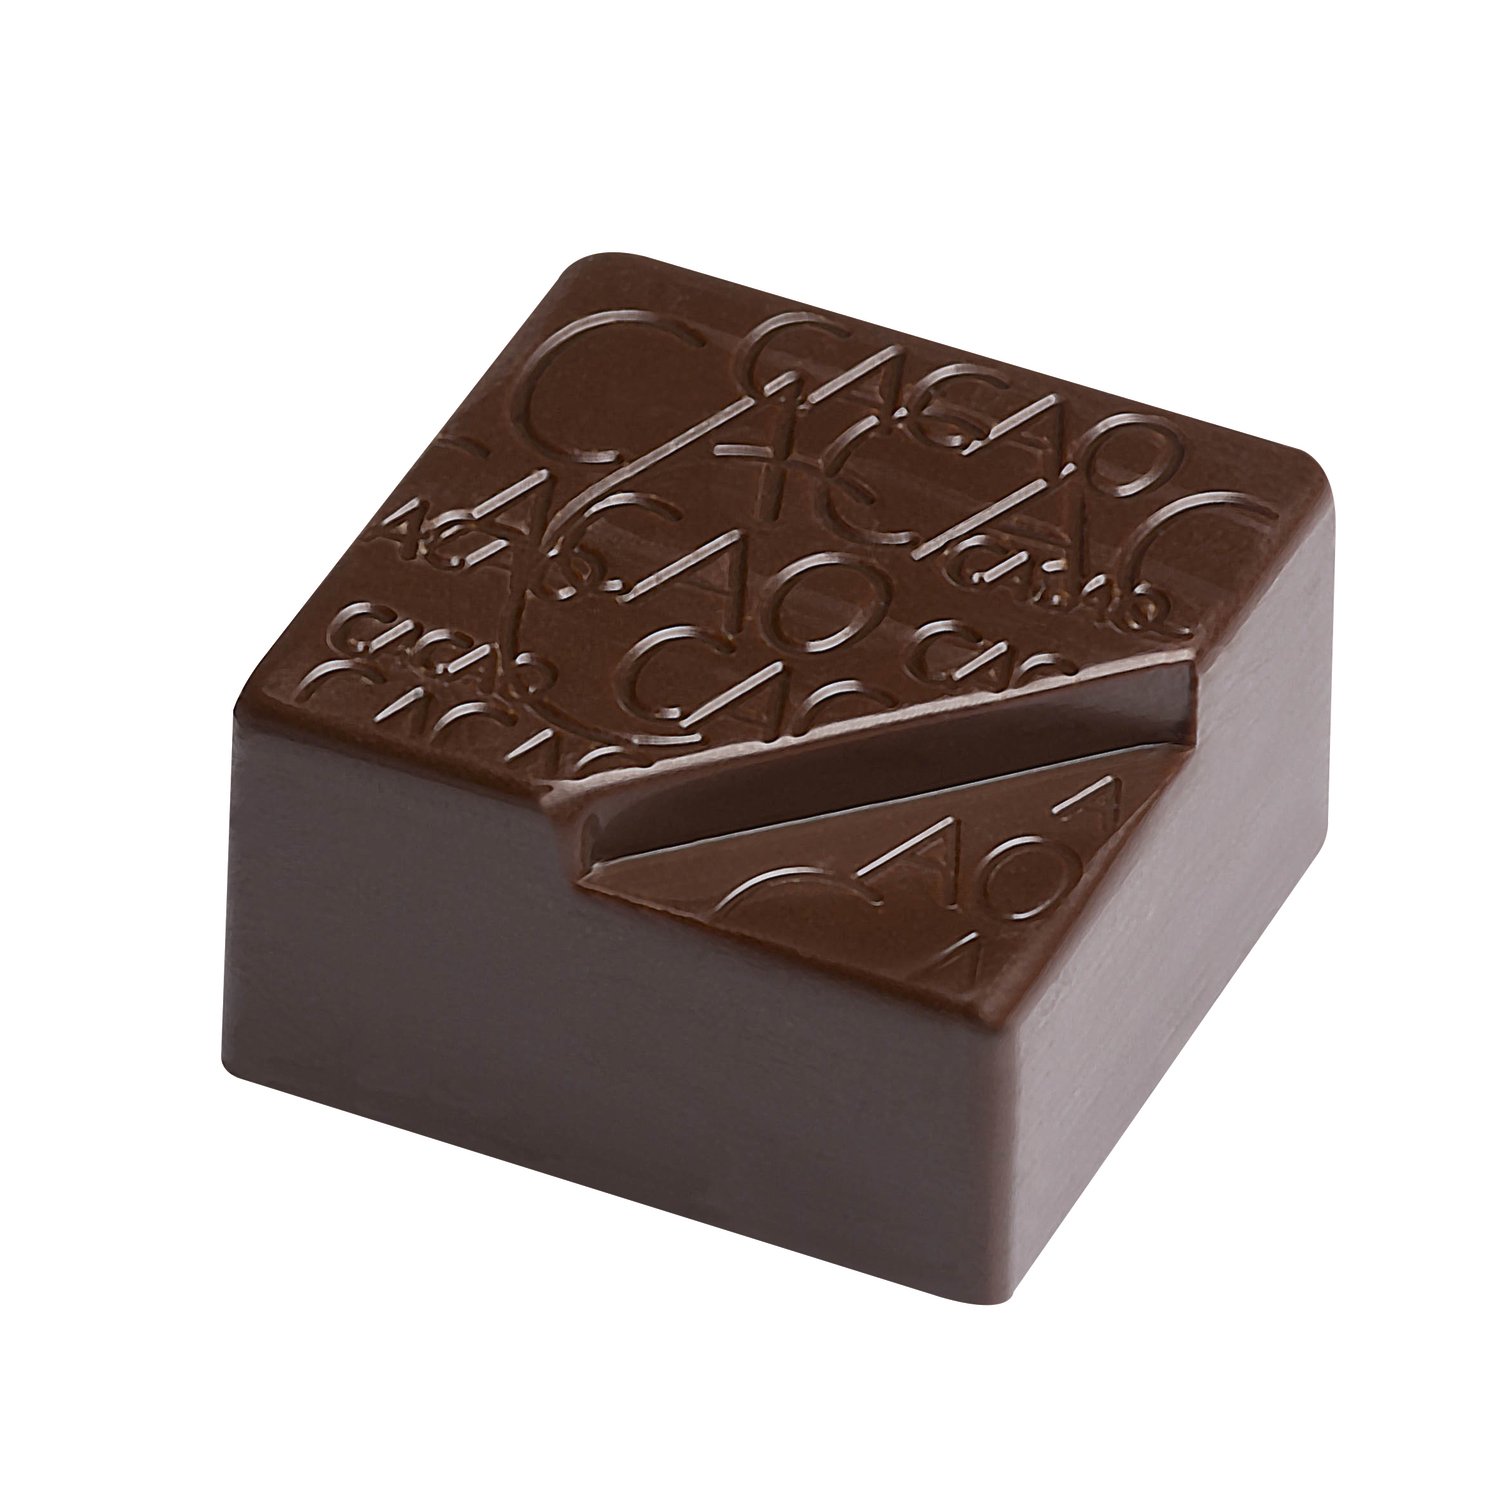 Cacao - caramel in dark chocolate 9.7g - 0.87kg